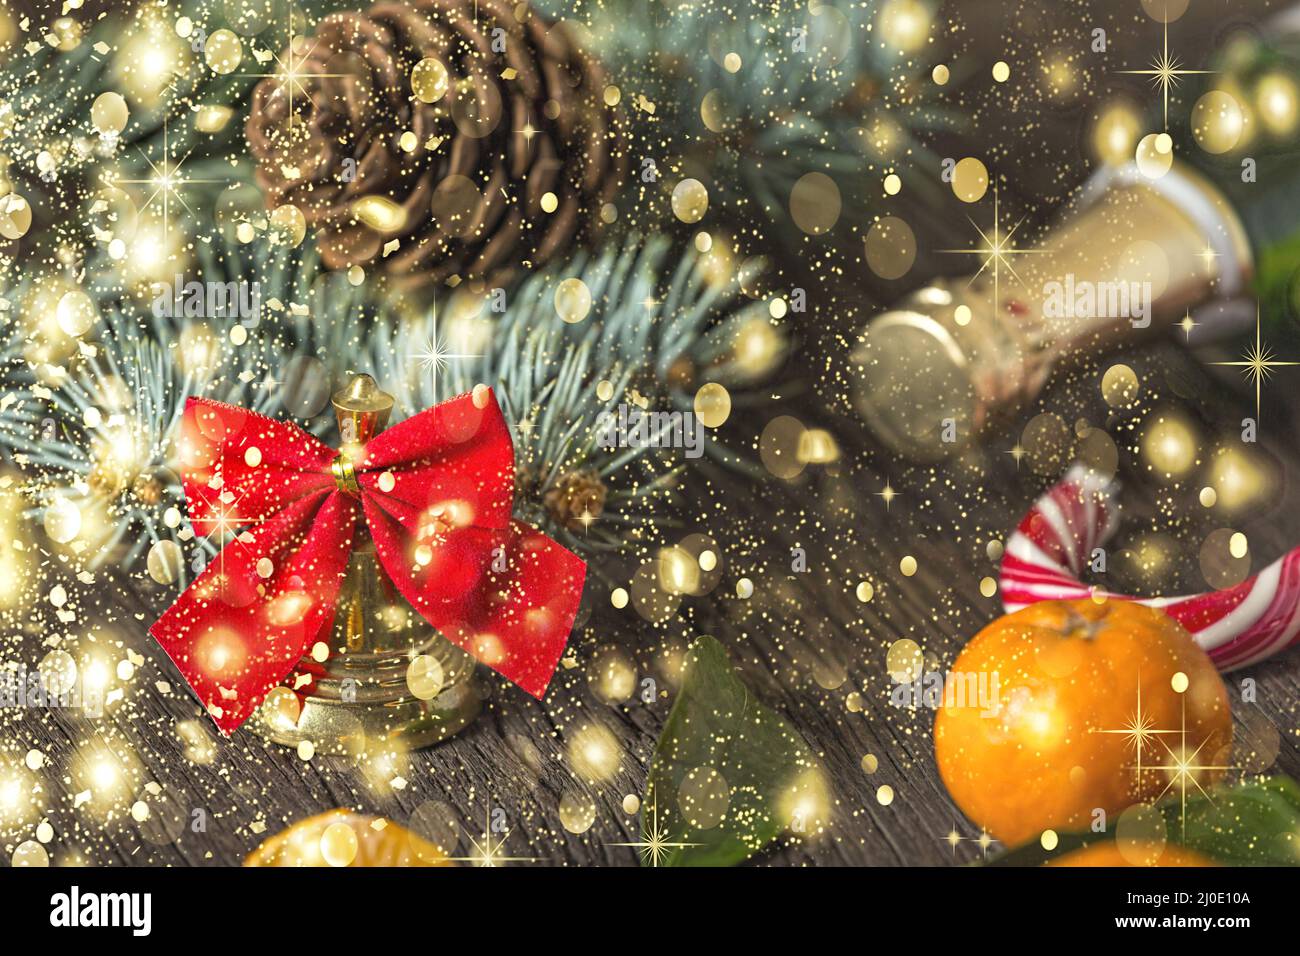 Christmas, chocolate, tangerines, New Year, Champagne, celebration, holiday Stock Photo